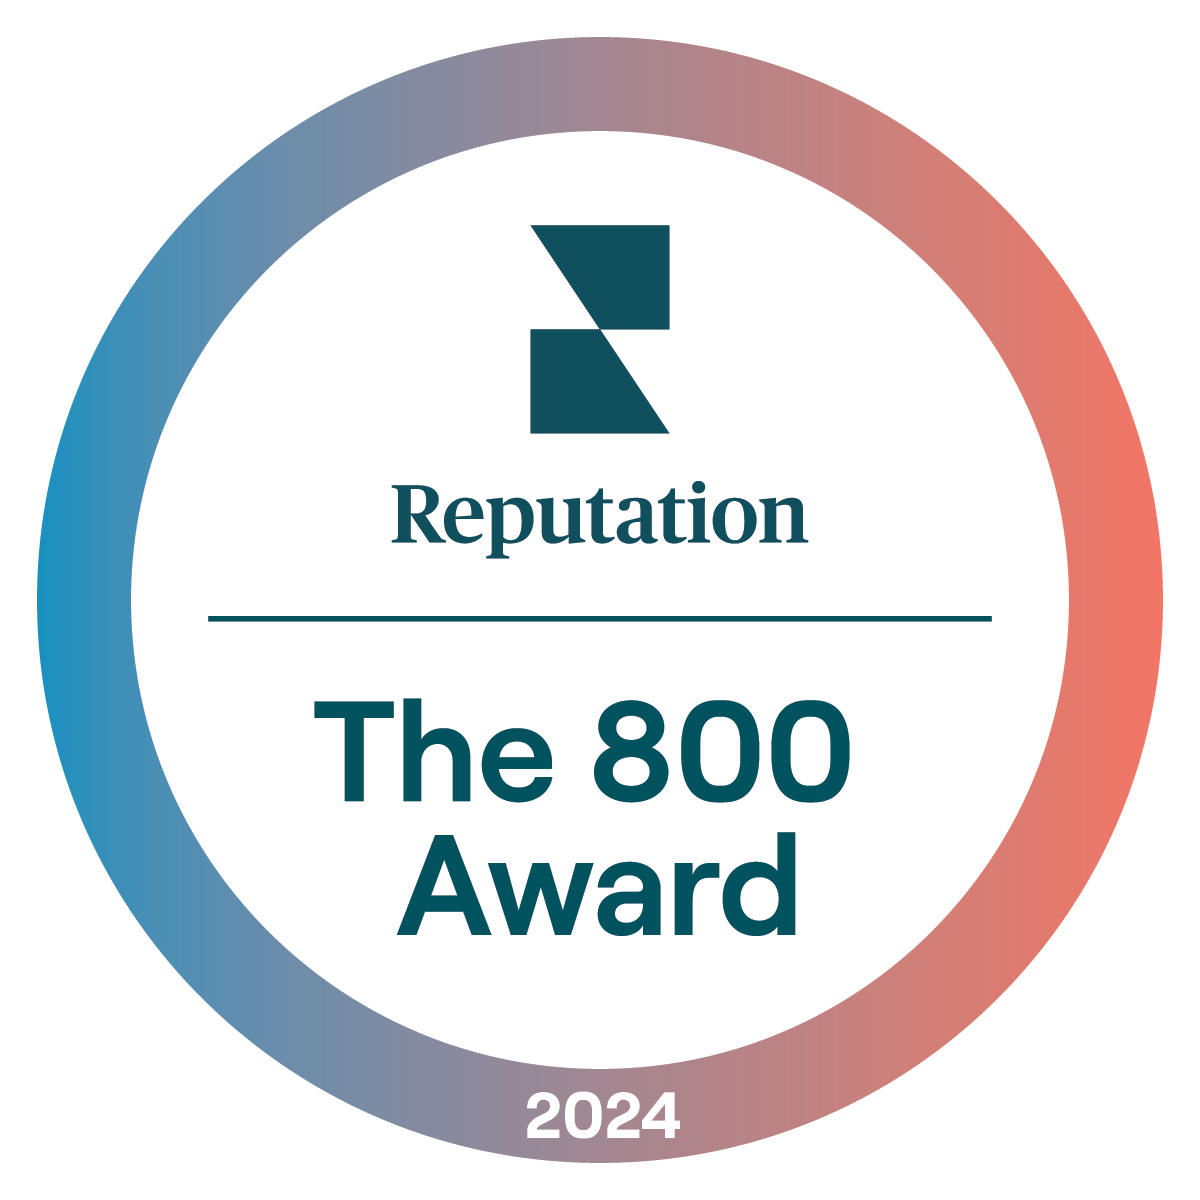 The 800 award